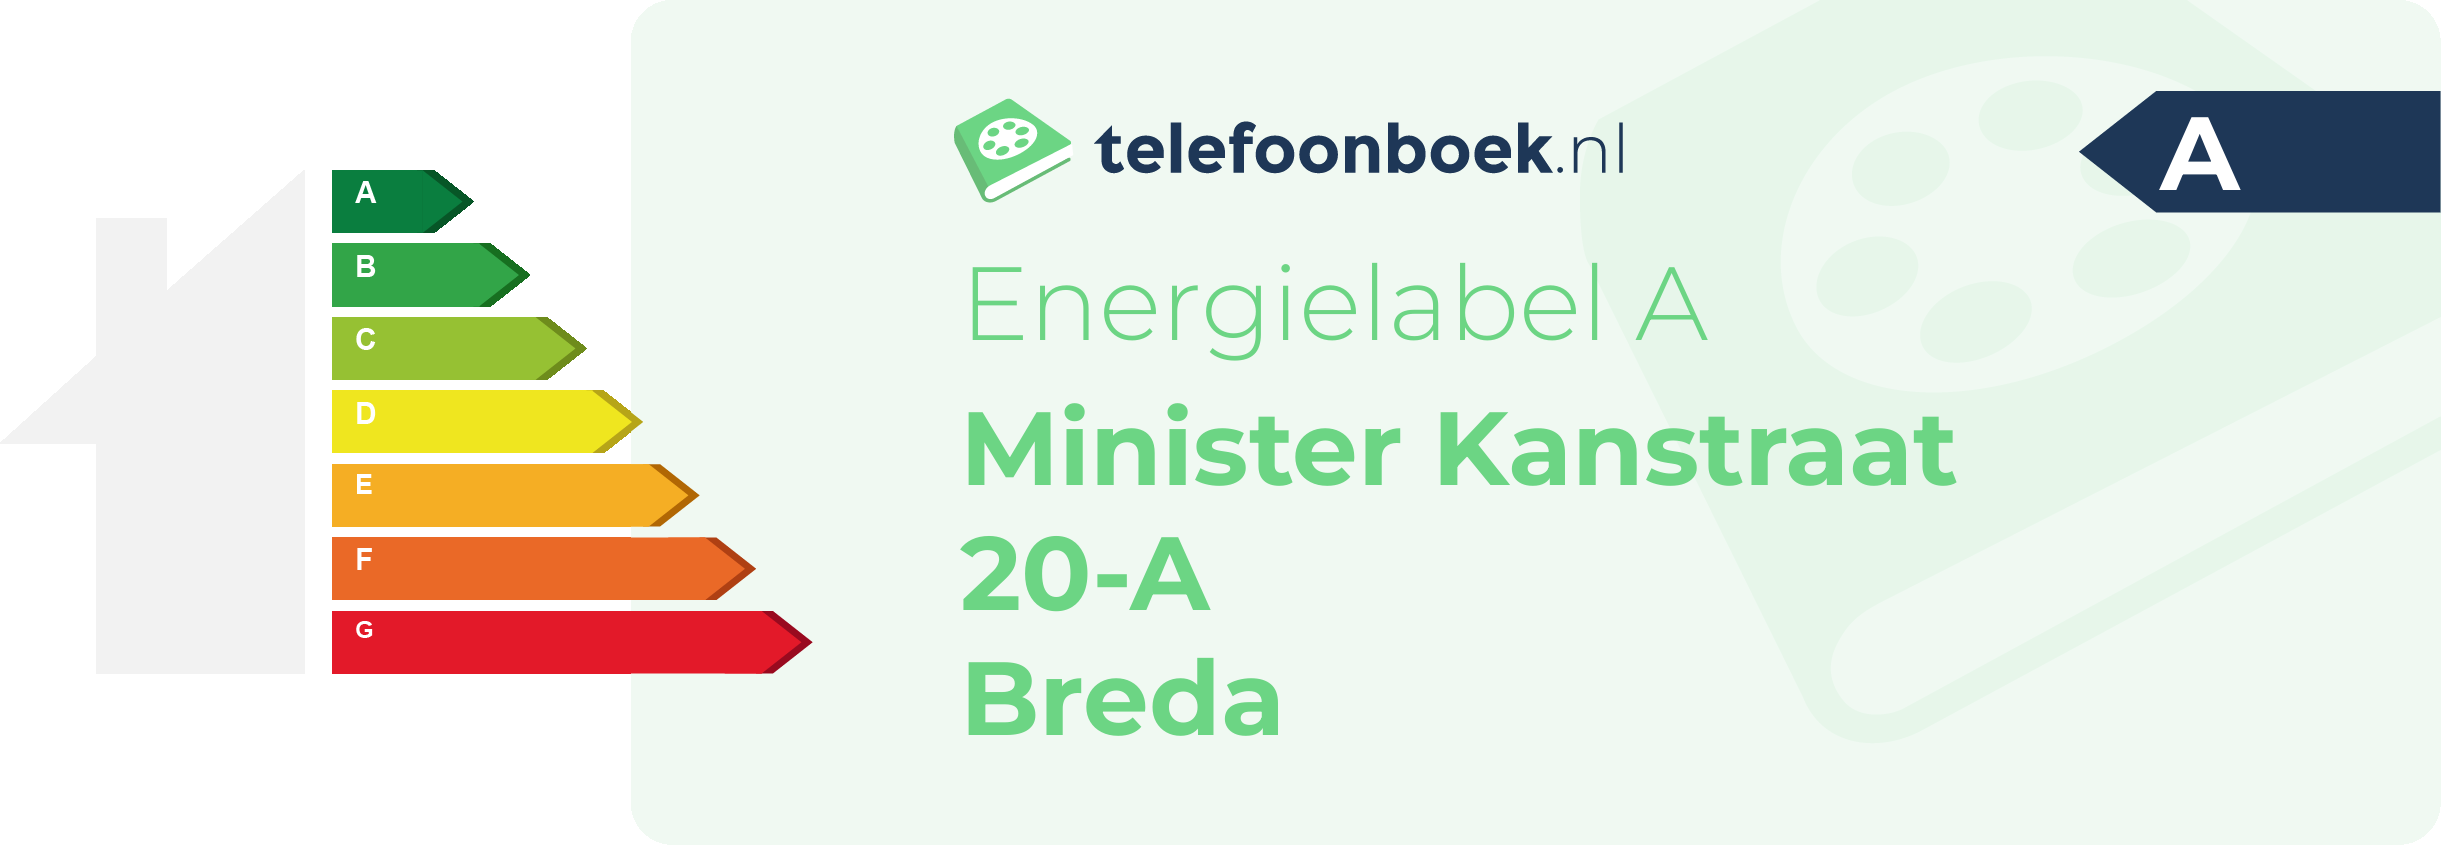 Energielabel Minister Kanstraat 20-A Breda